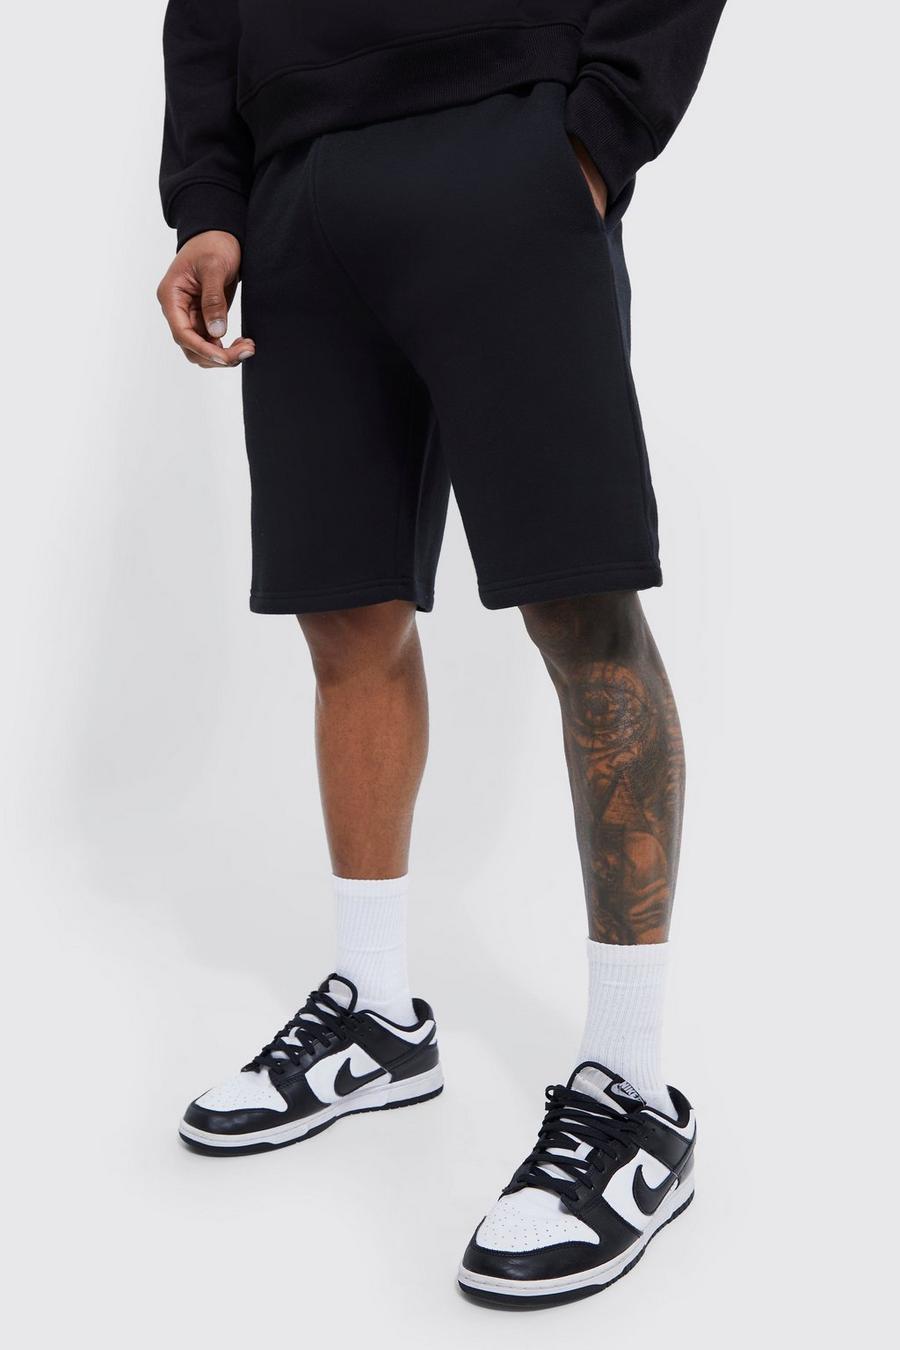 Lockere mittellange Basic Jersey-Shorts, Black